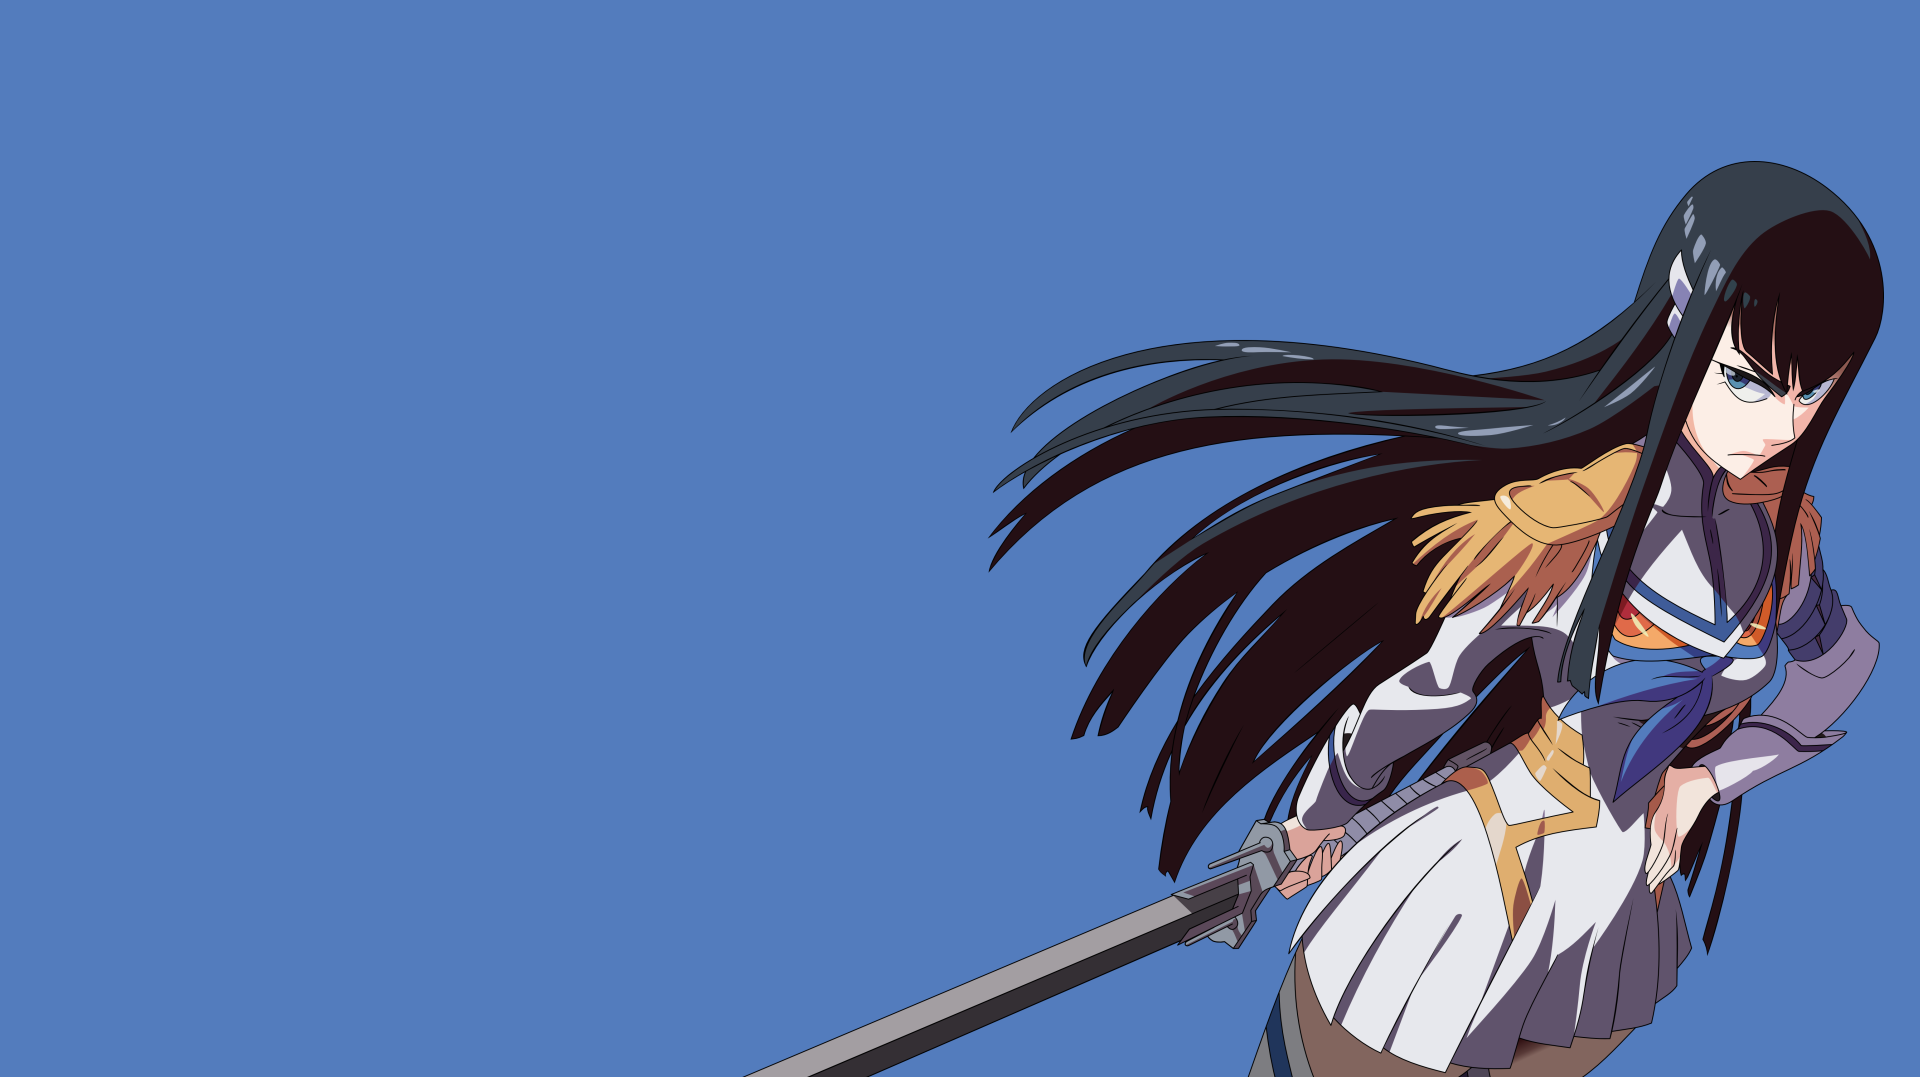 Anime 1920x1077 anime girls sword dark hair long hair blue background simple background anime fantasy art